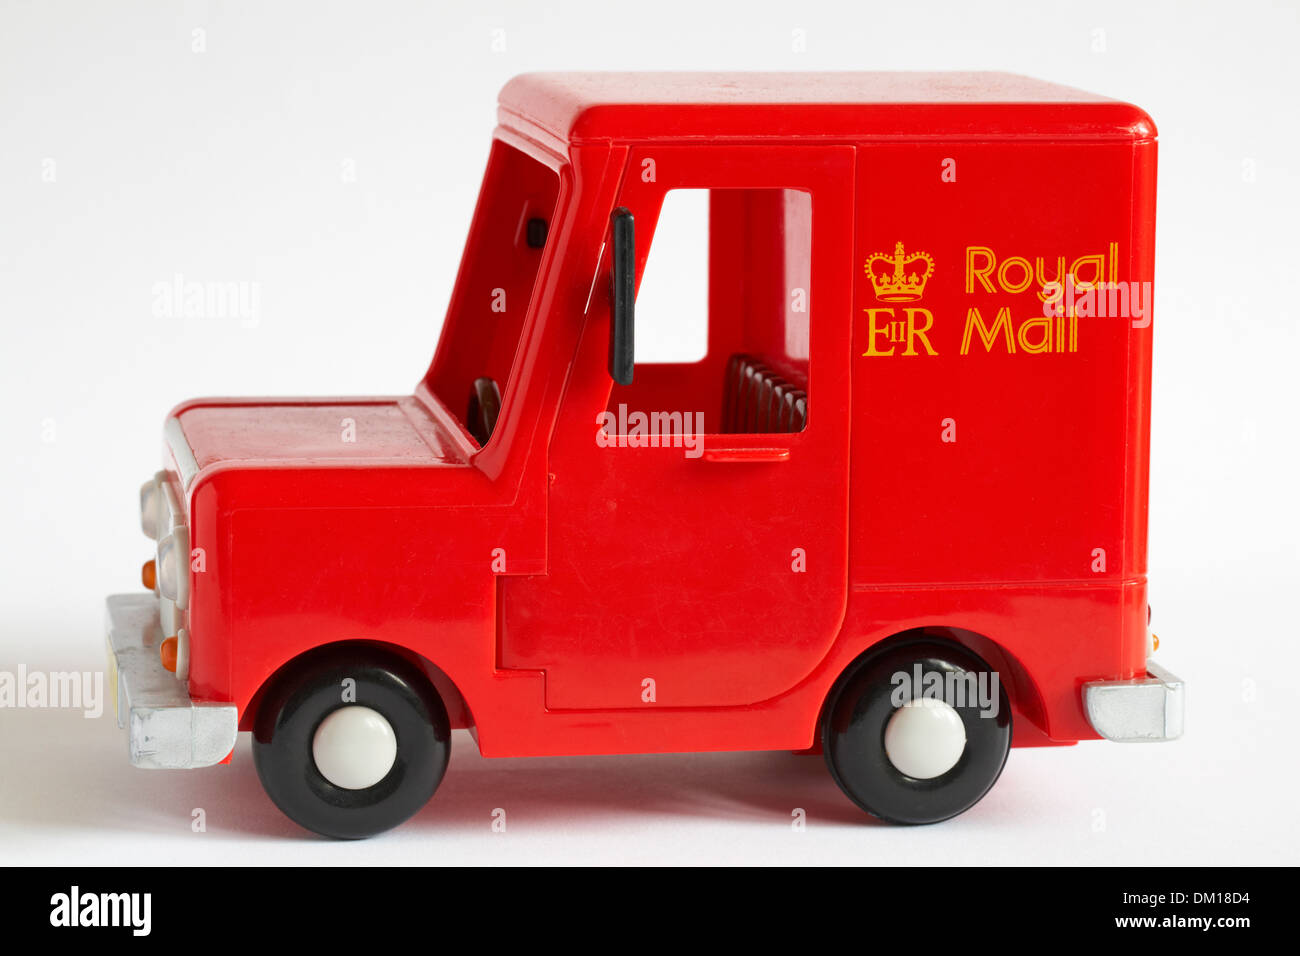 royal mail toy van